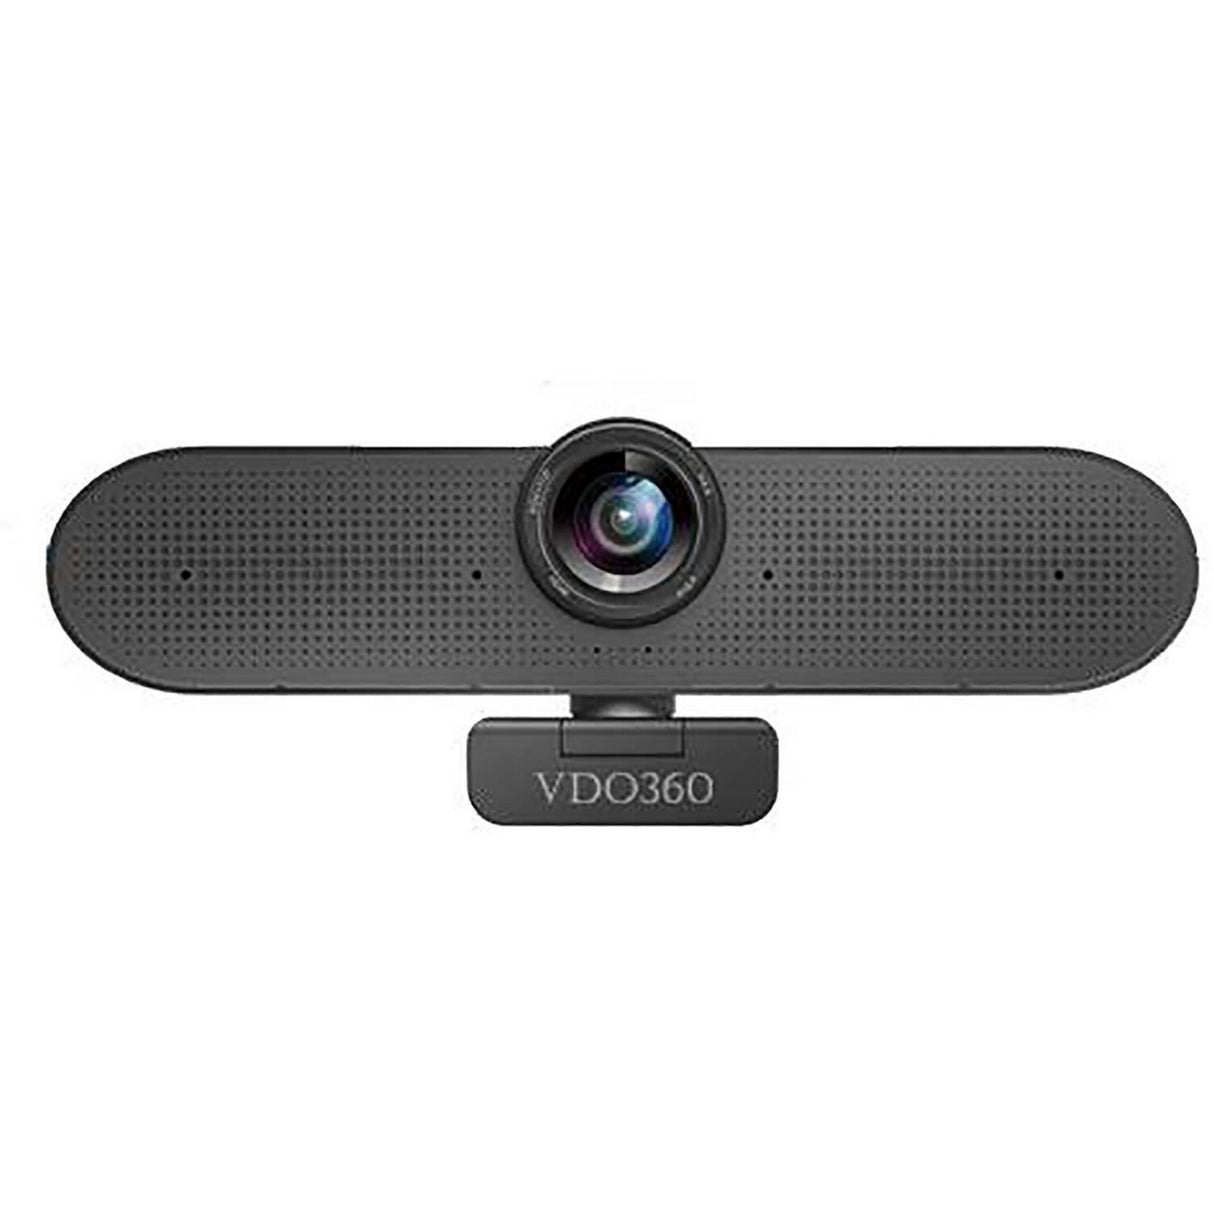 VDO360 3SEE 4K Collaboration Video Camera with 90 Degree FOV